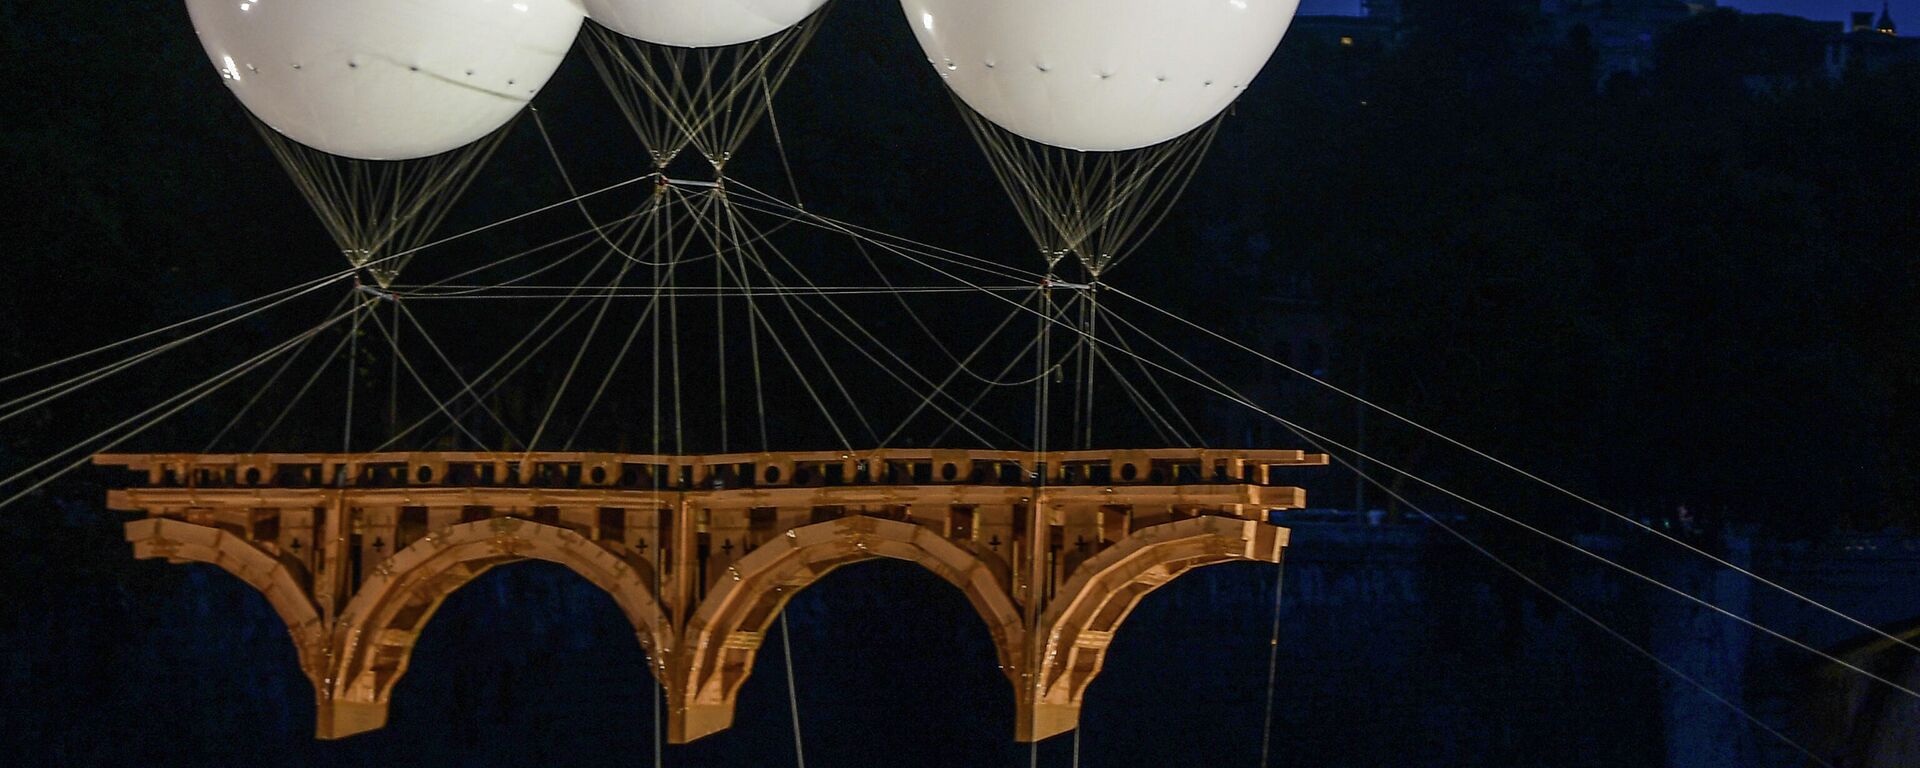 Prancūzų menininko Olivje Groseteto instaliacija Farnese tiltas“ virš Tibro upės Romoje - Sputnik Lietuva, 1920, 15.07.2021